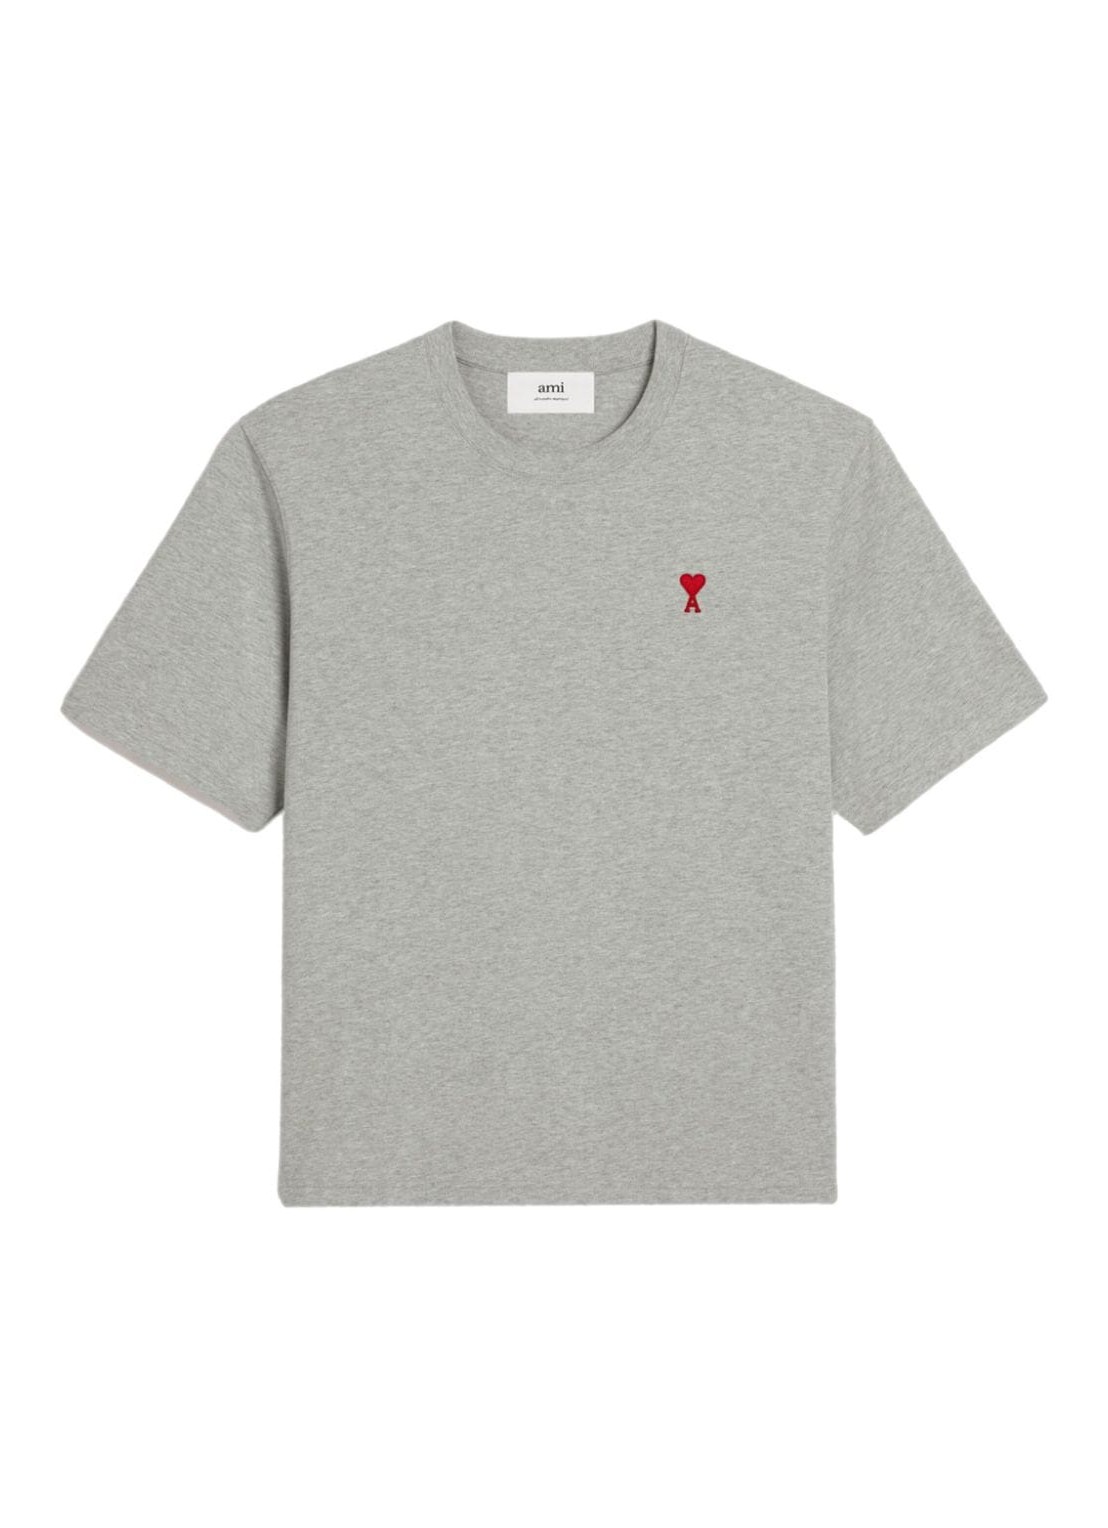 Camiseta ami t-shirt man red ami de coeur tshirt bfuts005726 0951 talla gris
 